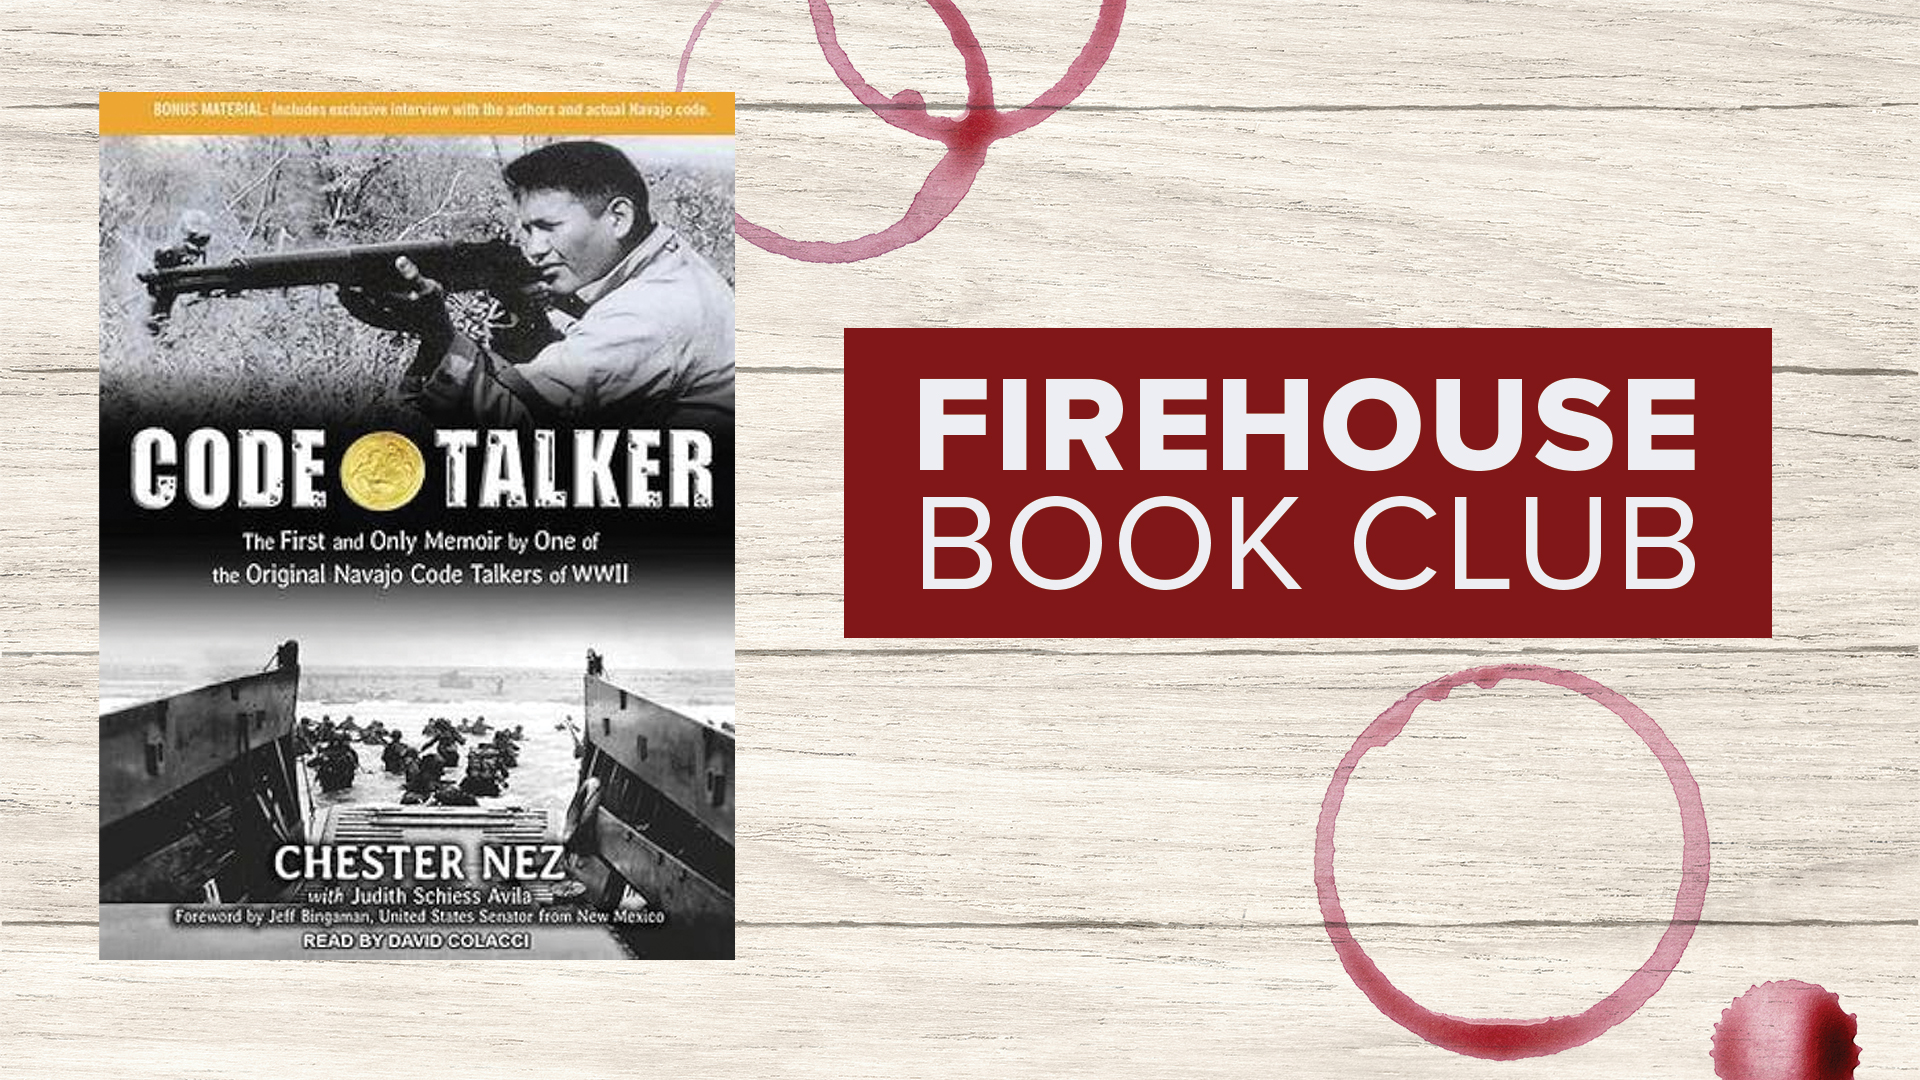 Firehouse Wine Cellars Book Club - Code Talker